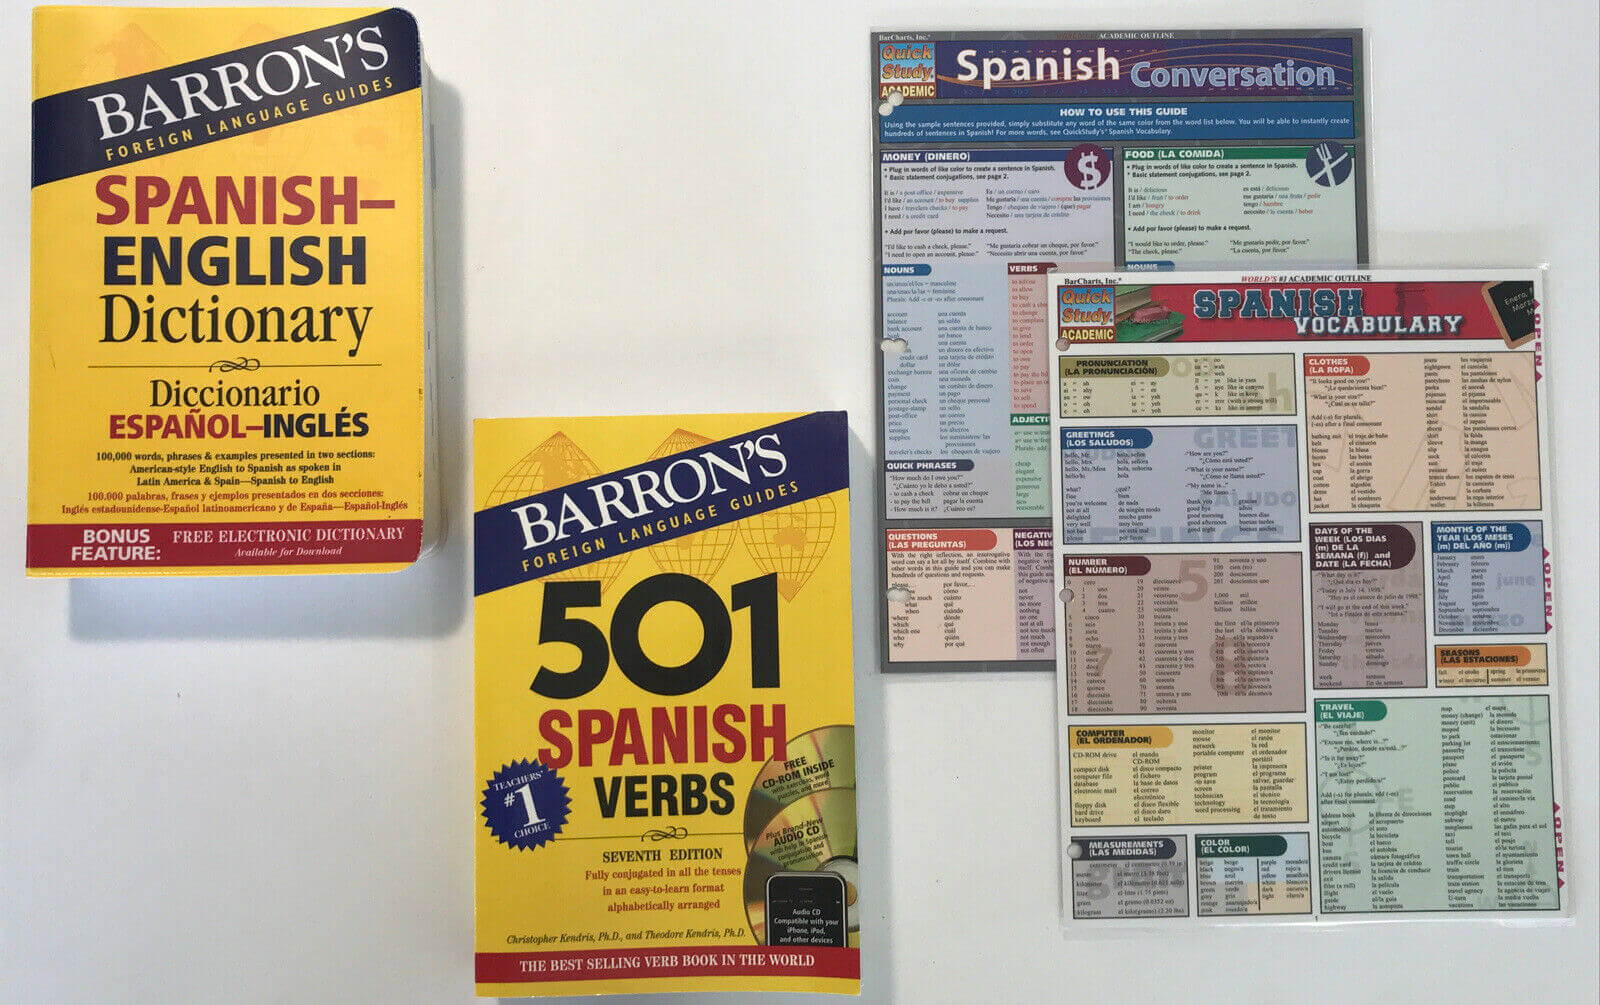 501 Spanish Verbs (501 Verb Series) 8th Edition – Download PDF